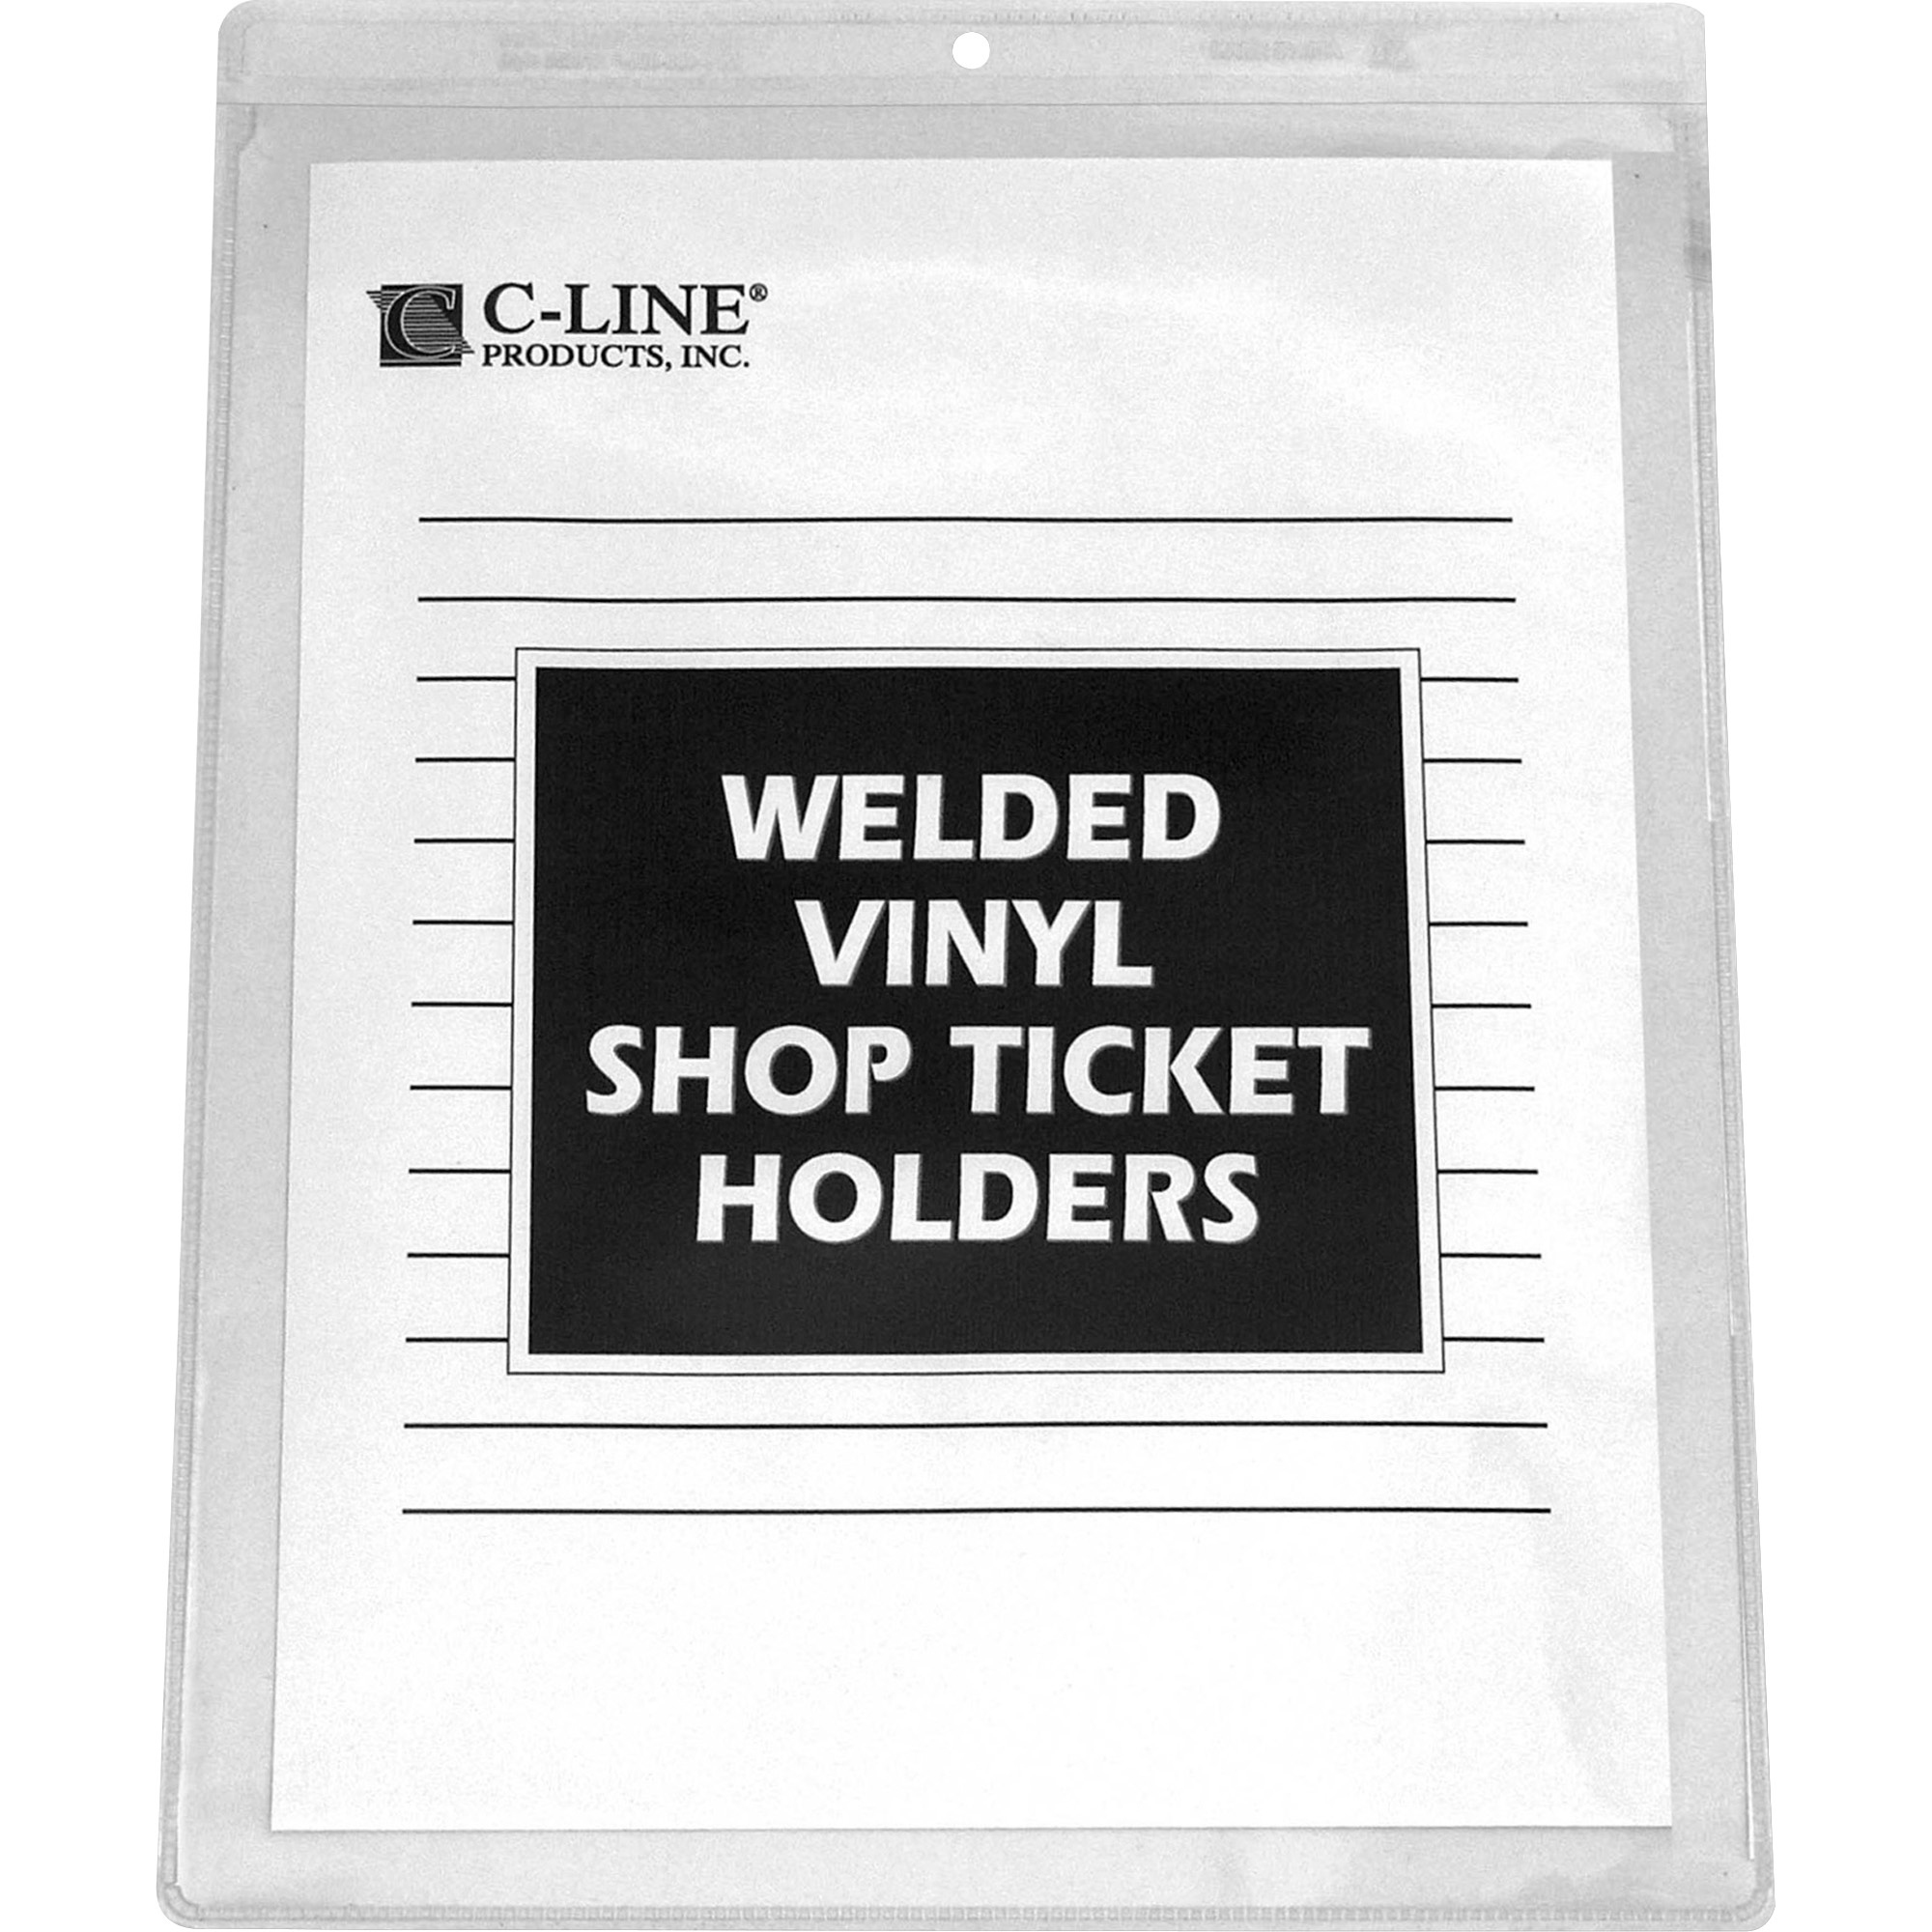 C-Line Vinyl Shop Ticket Holders, Welded - Both Sides Clear